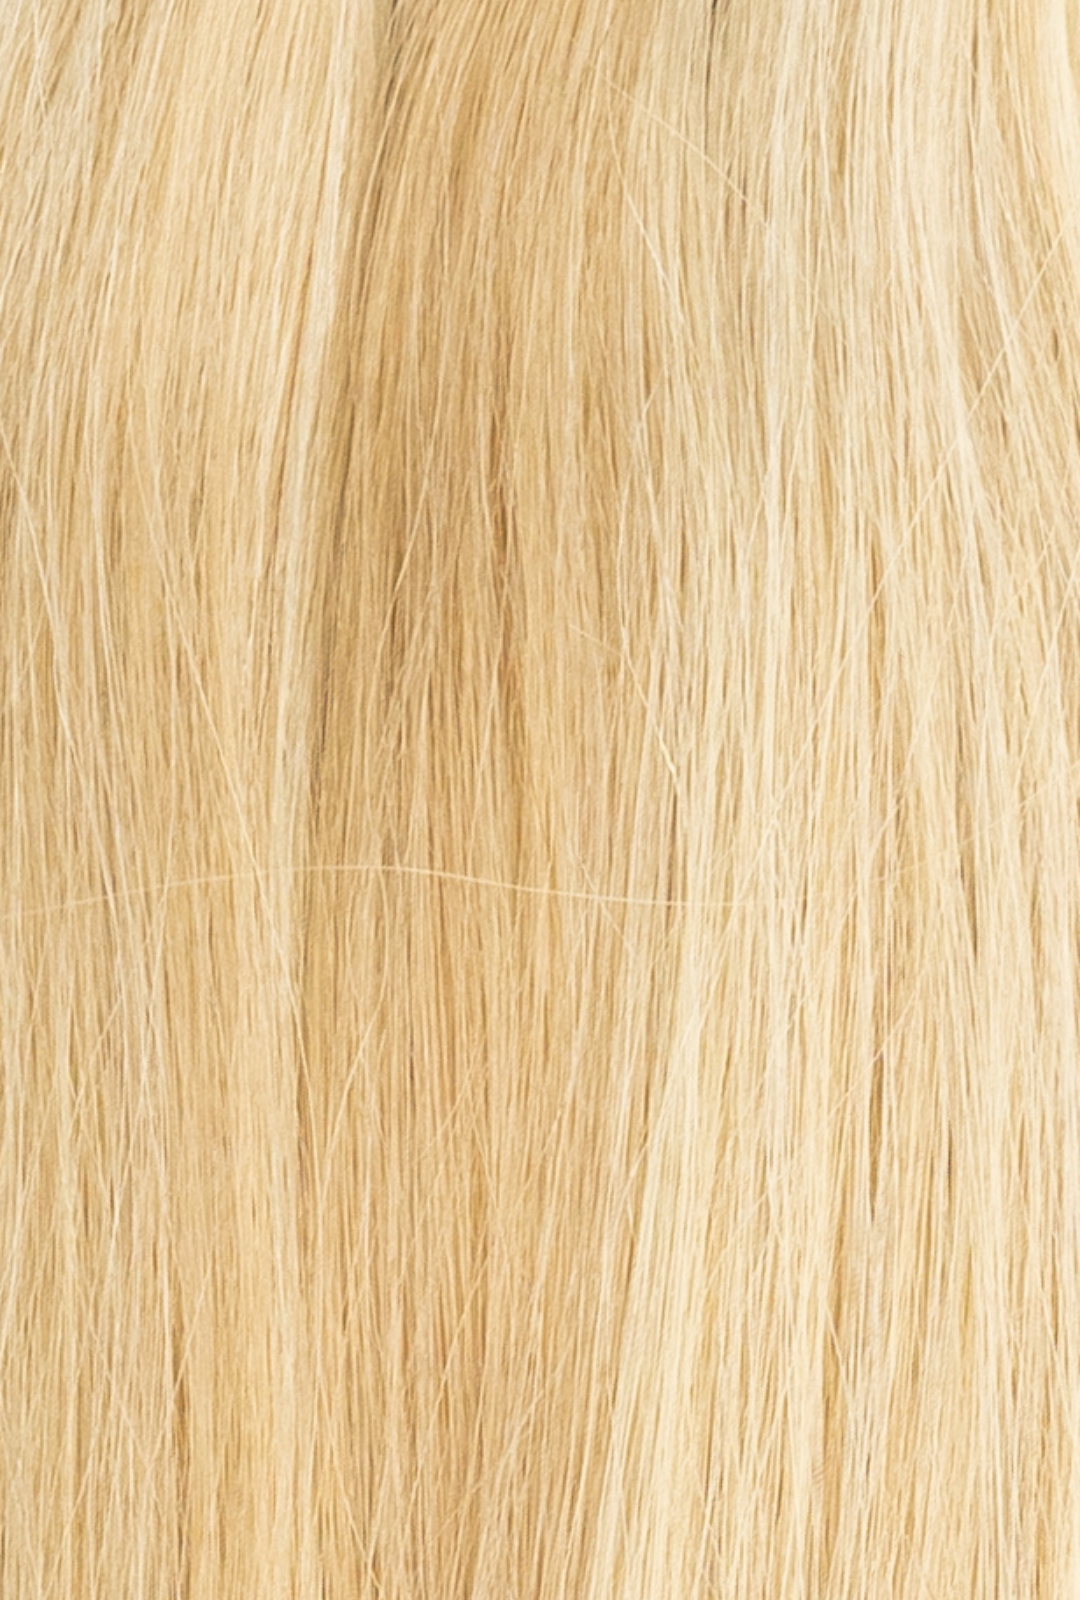 Laced Hair Keratin Bond Extensions Dimensional #16/22 (Buttercream)